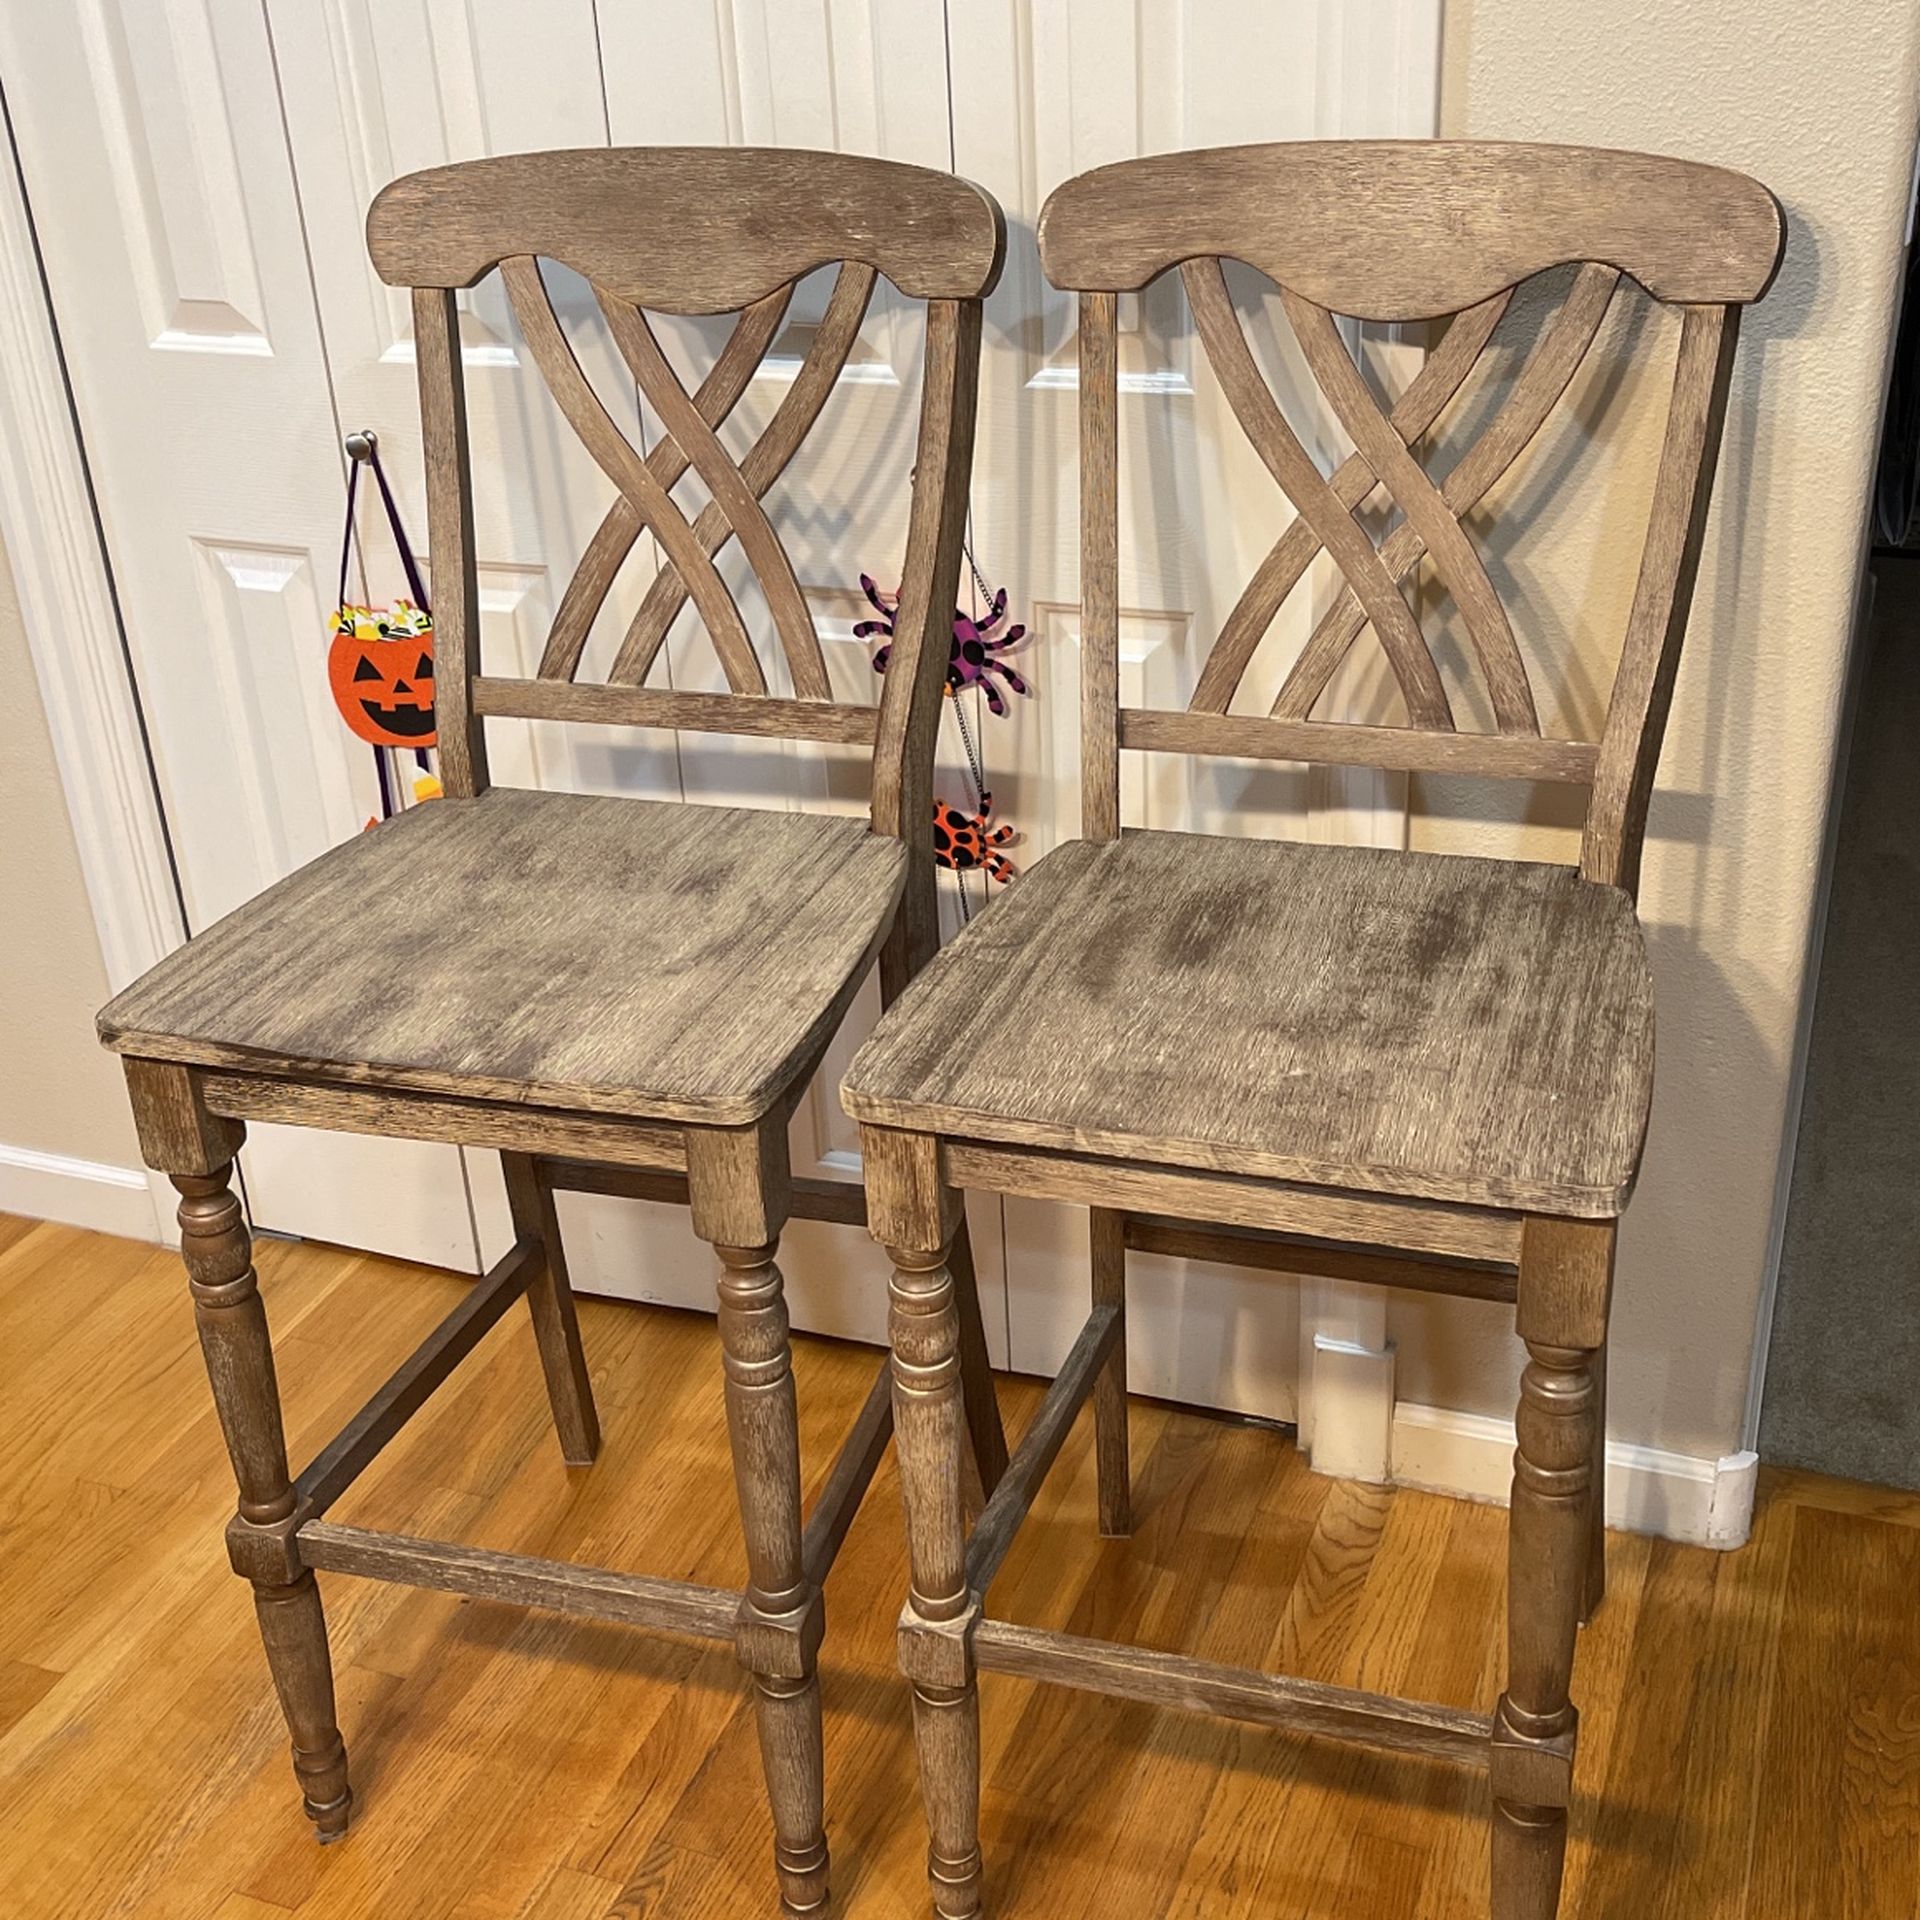 2 Wood Bar stools 